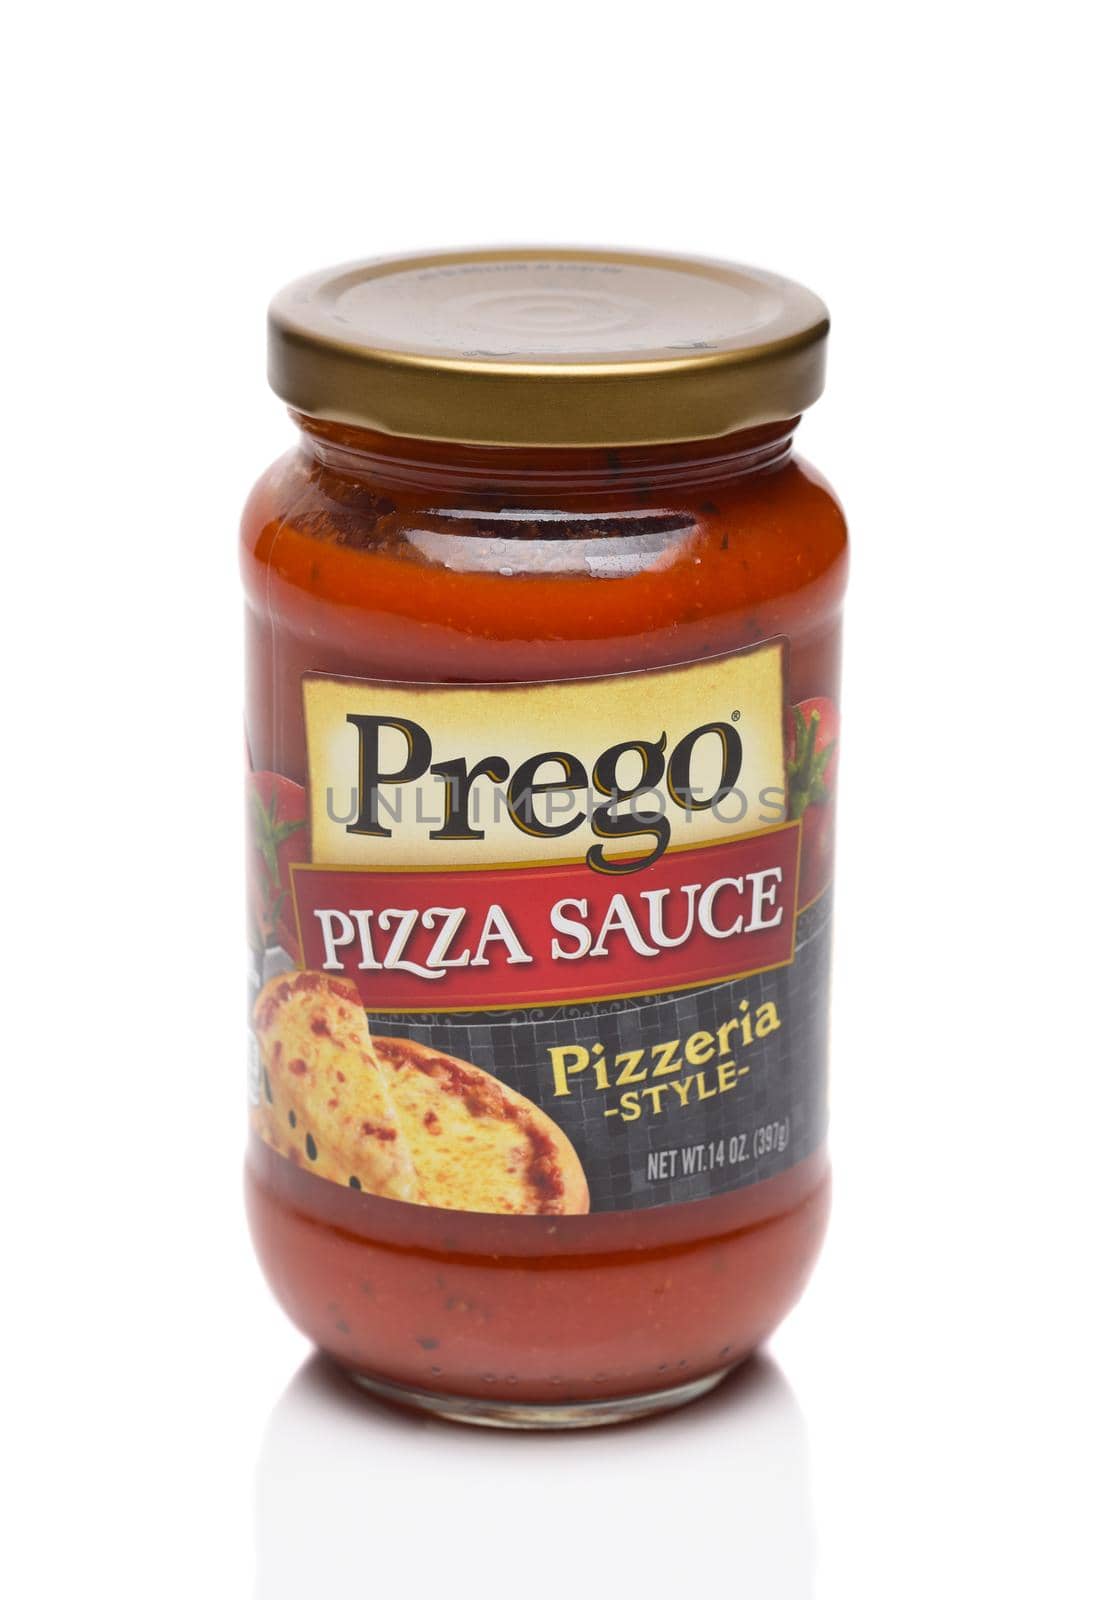 IRVINE, CALIFORNIA - 25 MAY 2020: A jar of Prego Pizza Sauce, Pizzeria Style. by sCukrov